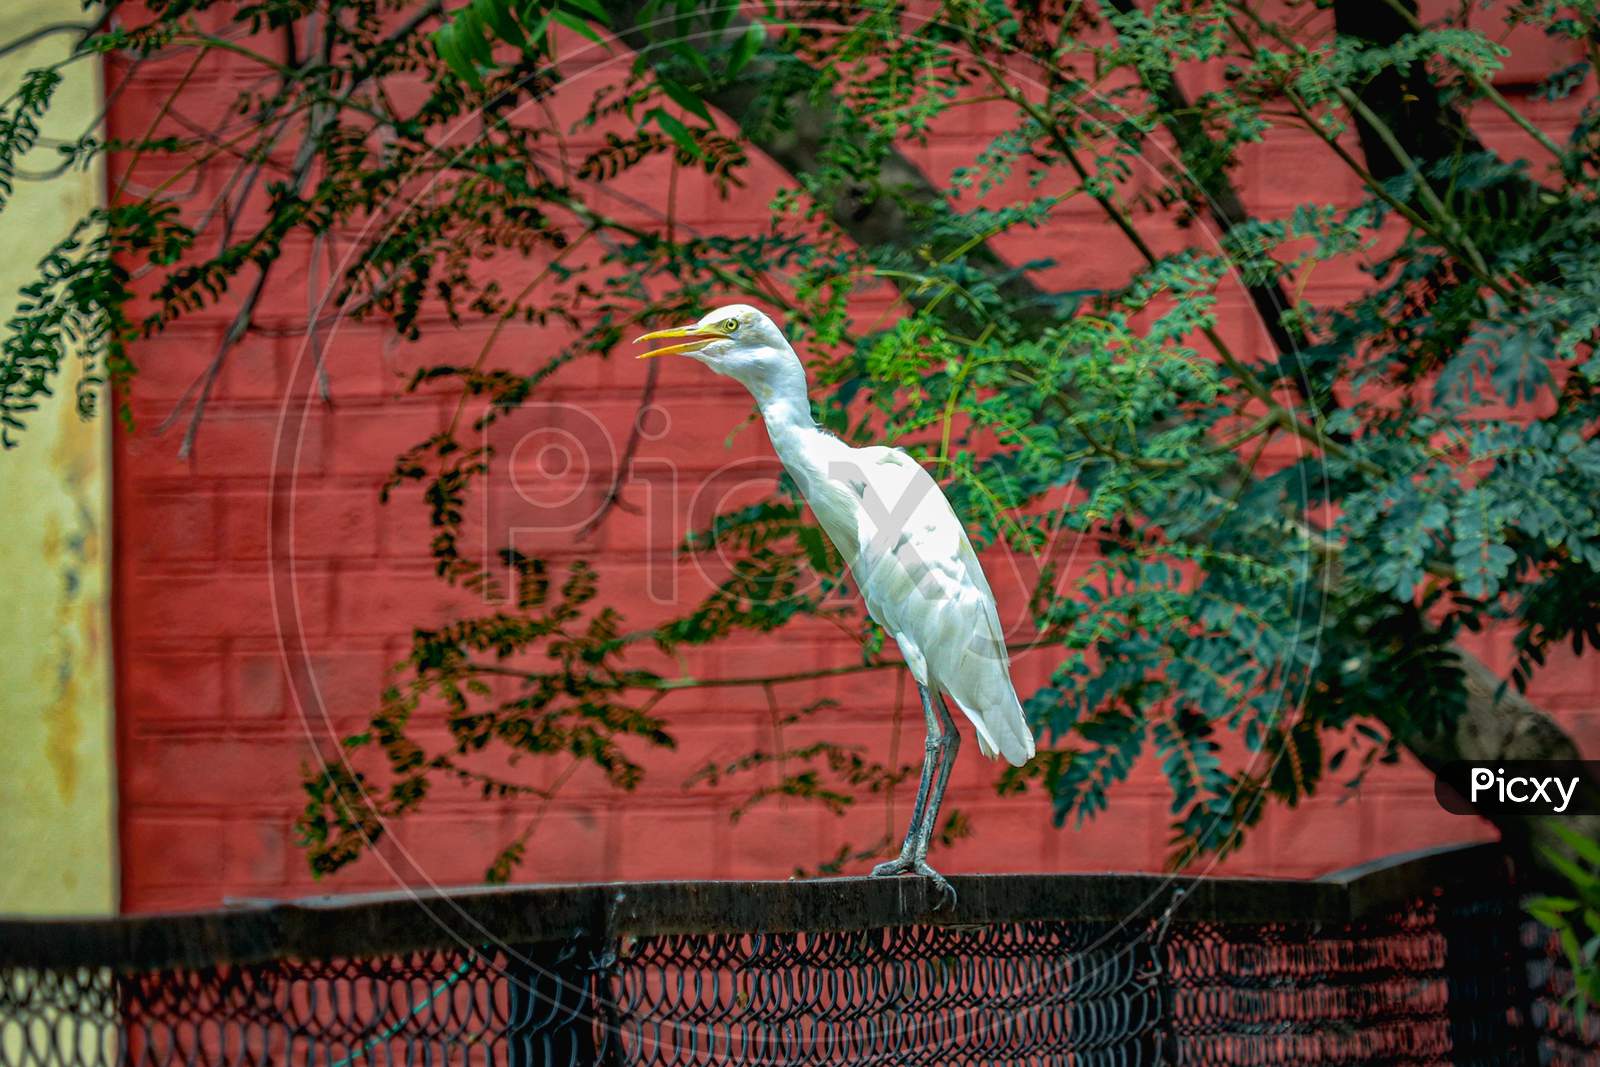 Egret bird sitting on fence